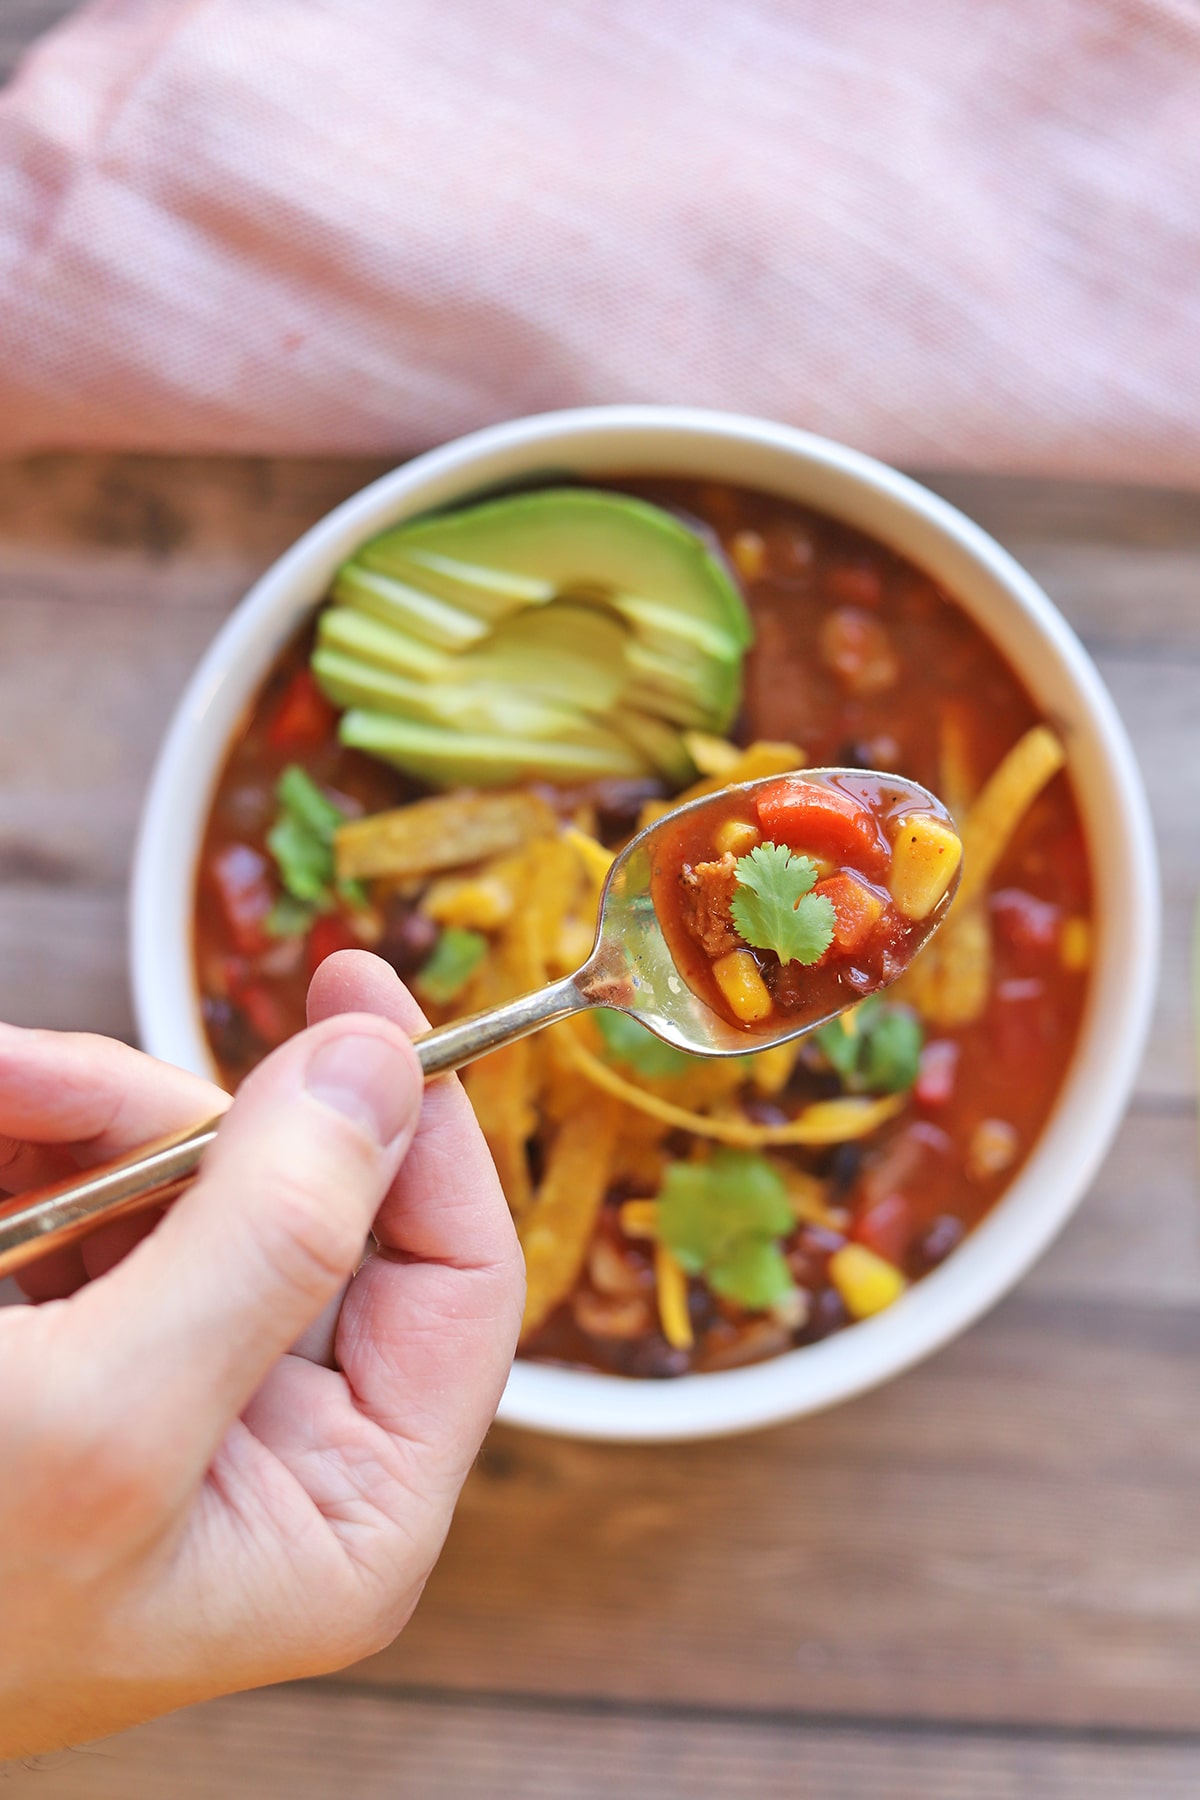 Overhead spoon over bowl of soup with avocado, cilantro, and crispy tortilla strips.